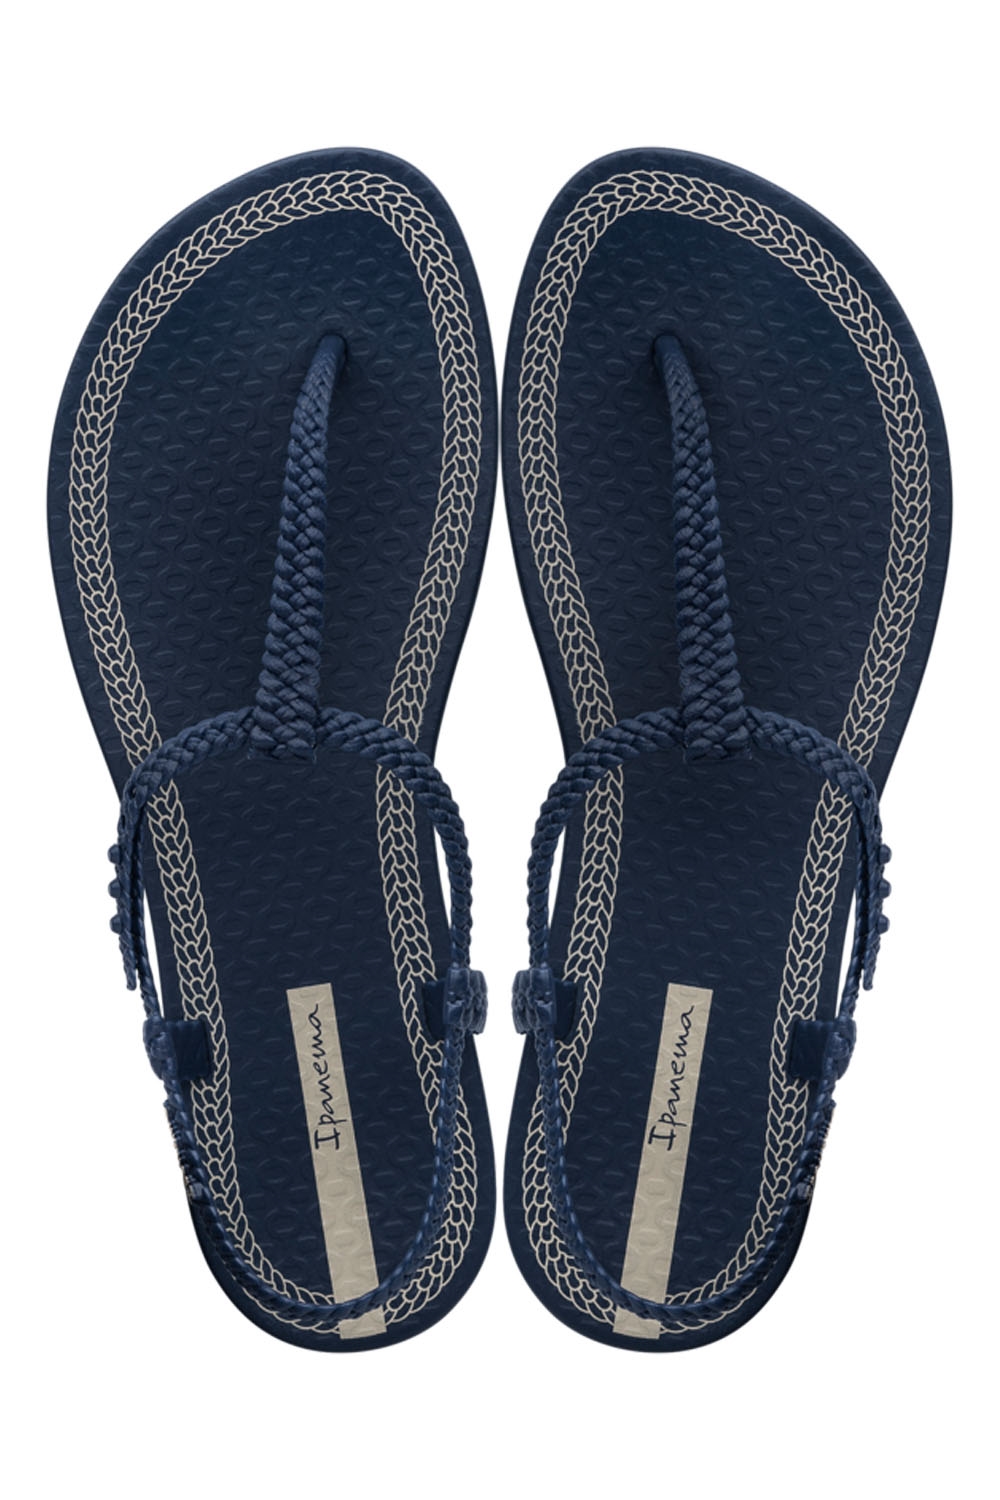 Sandals Ipanema Class Drop Azul Azul - Brand Ipanema